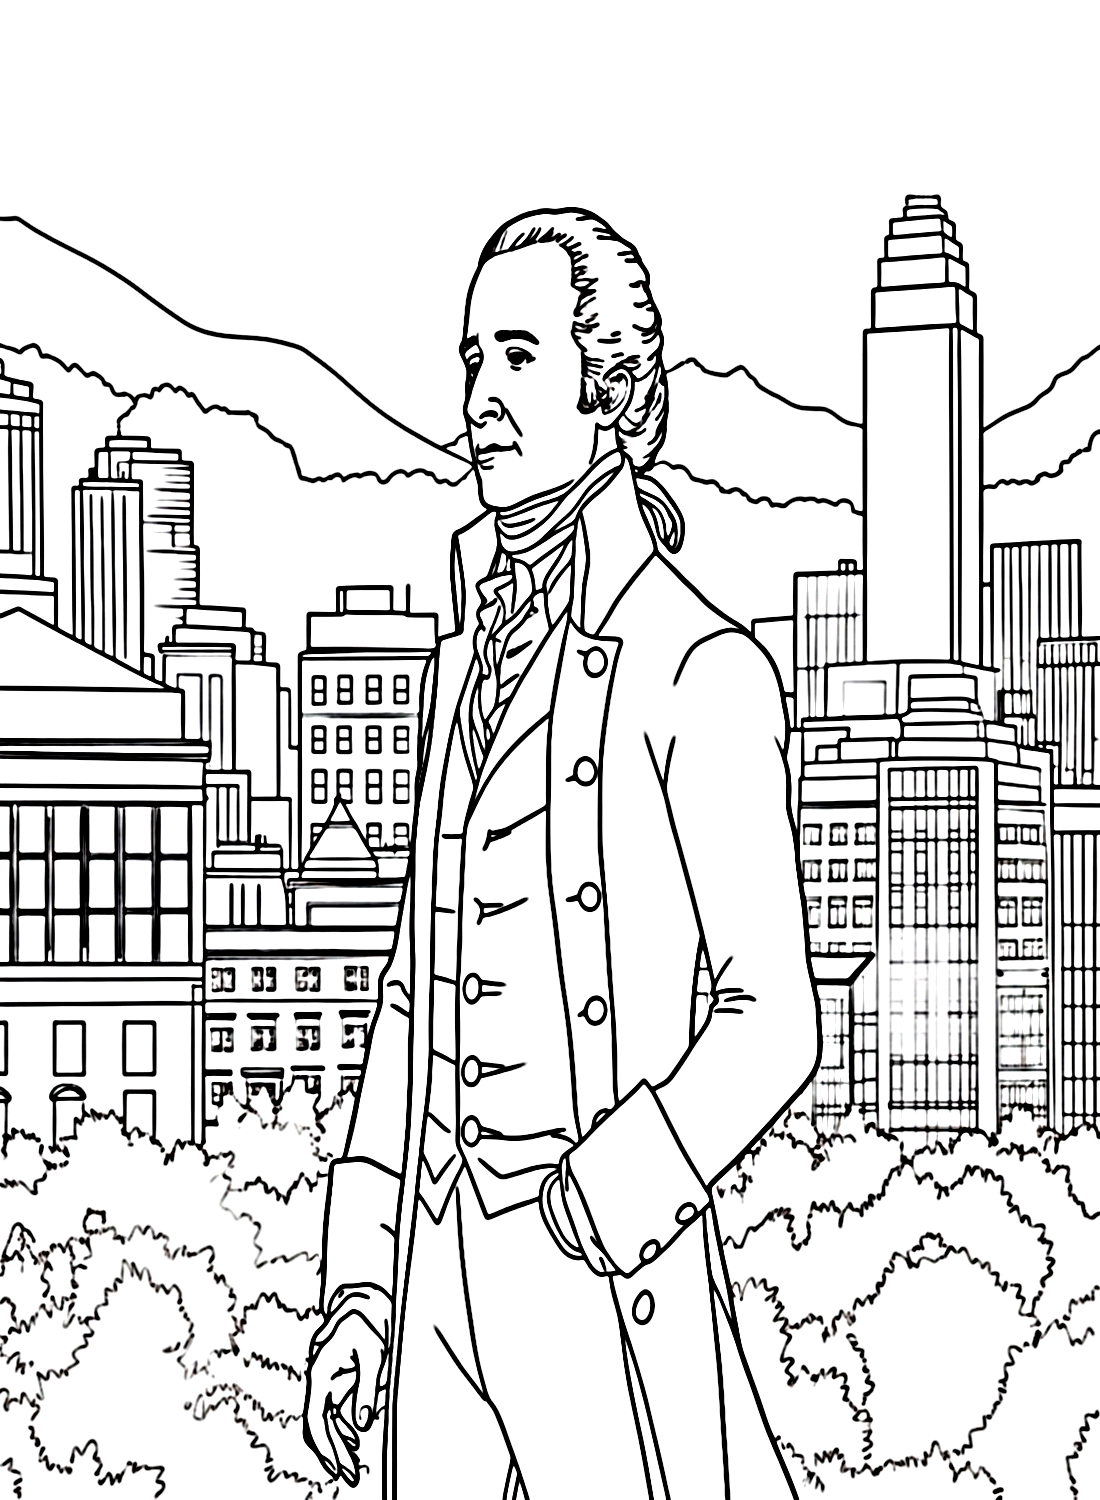 Alexander Hamilton La pensée d'Alexander Hamilton